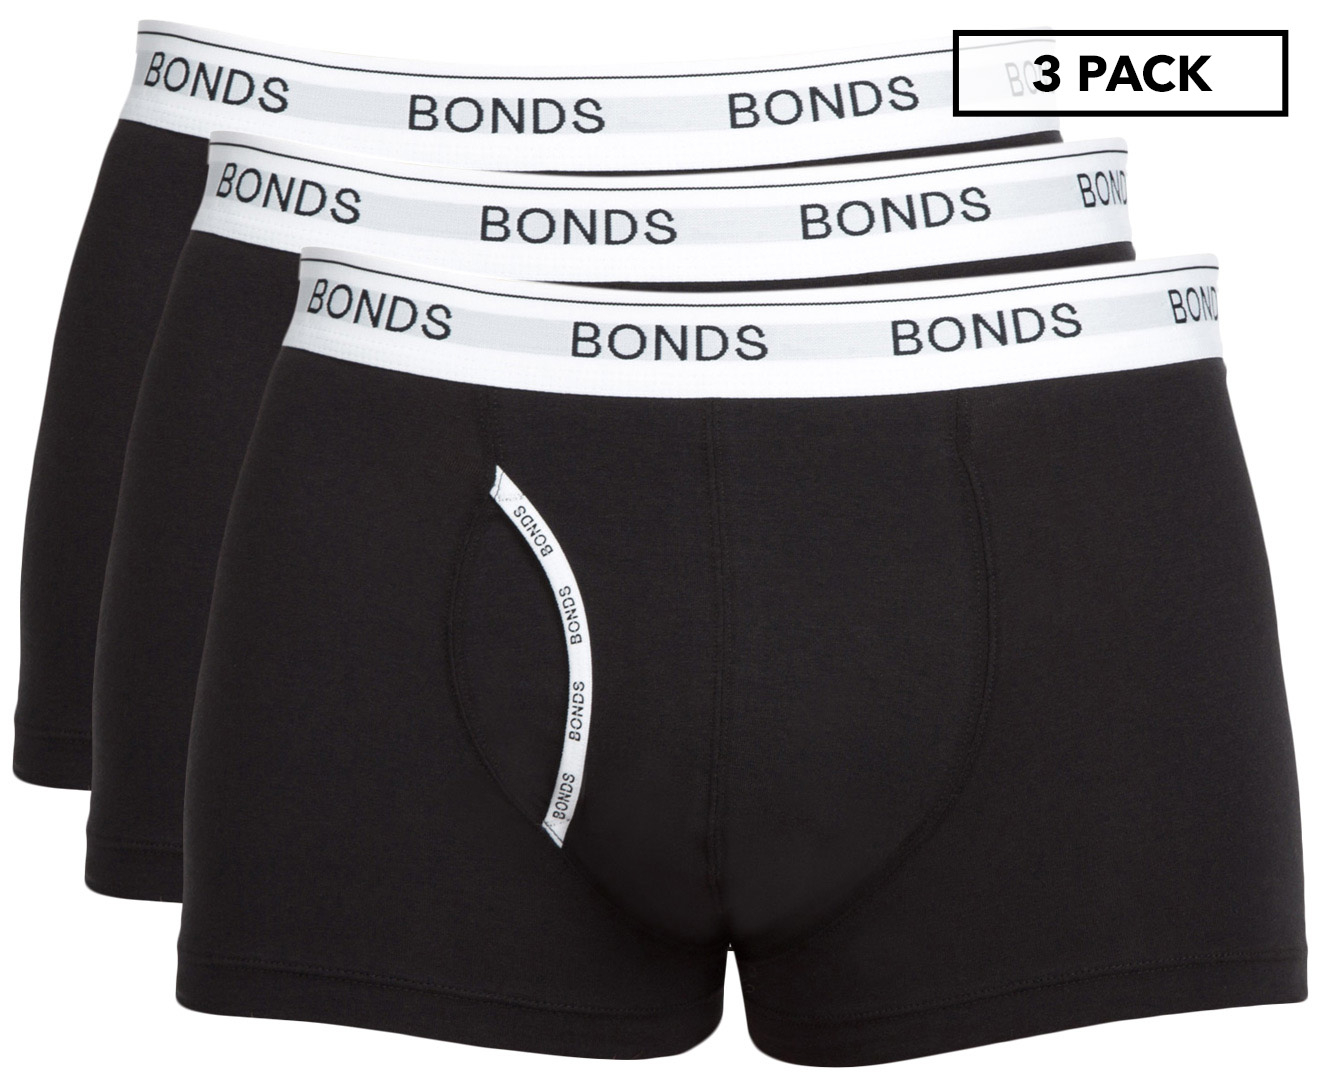 Bonds Originals for Men - Mens Trunks, Shorts & More